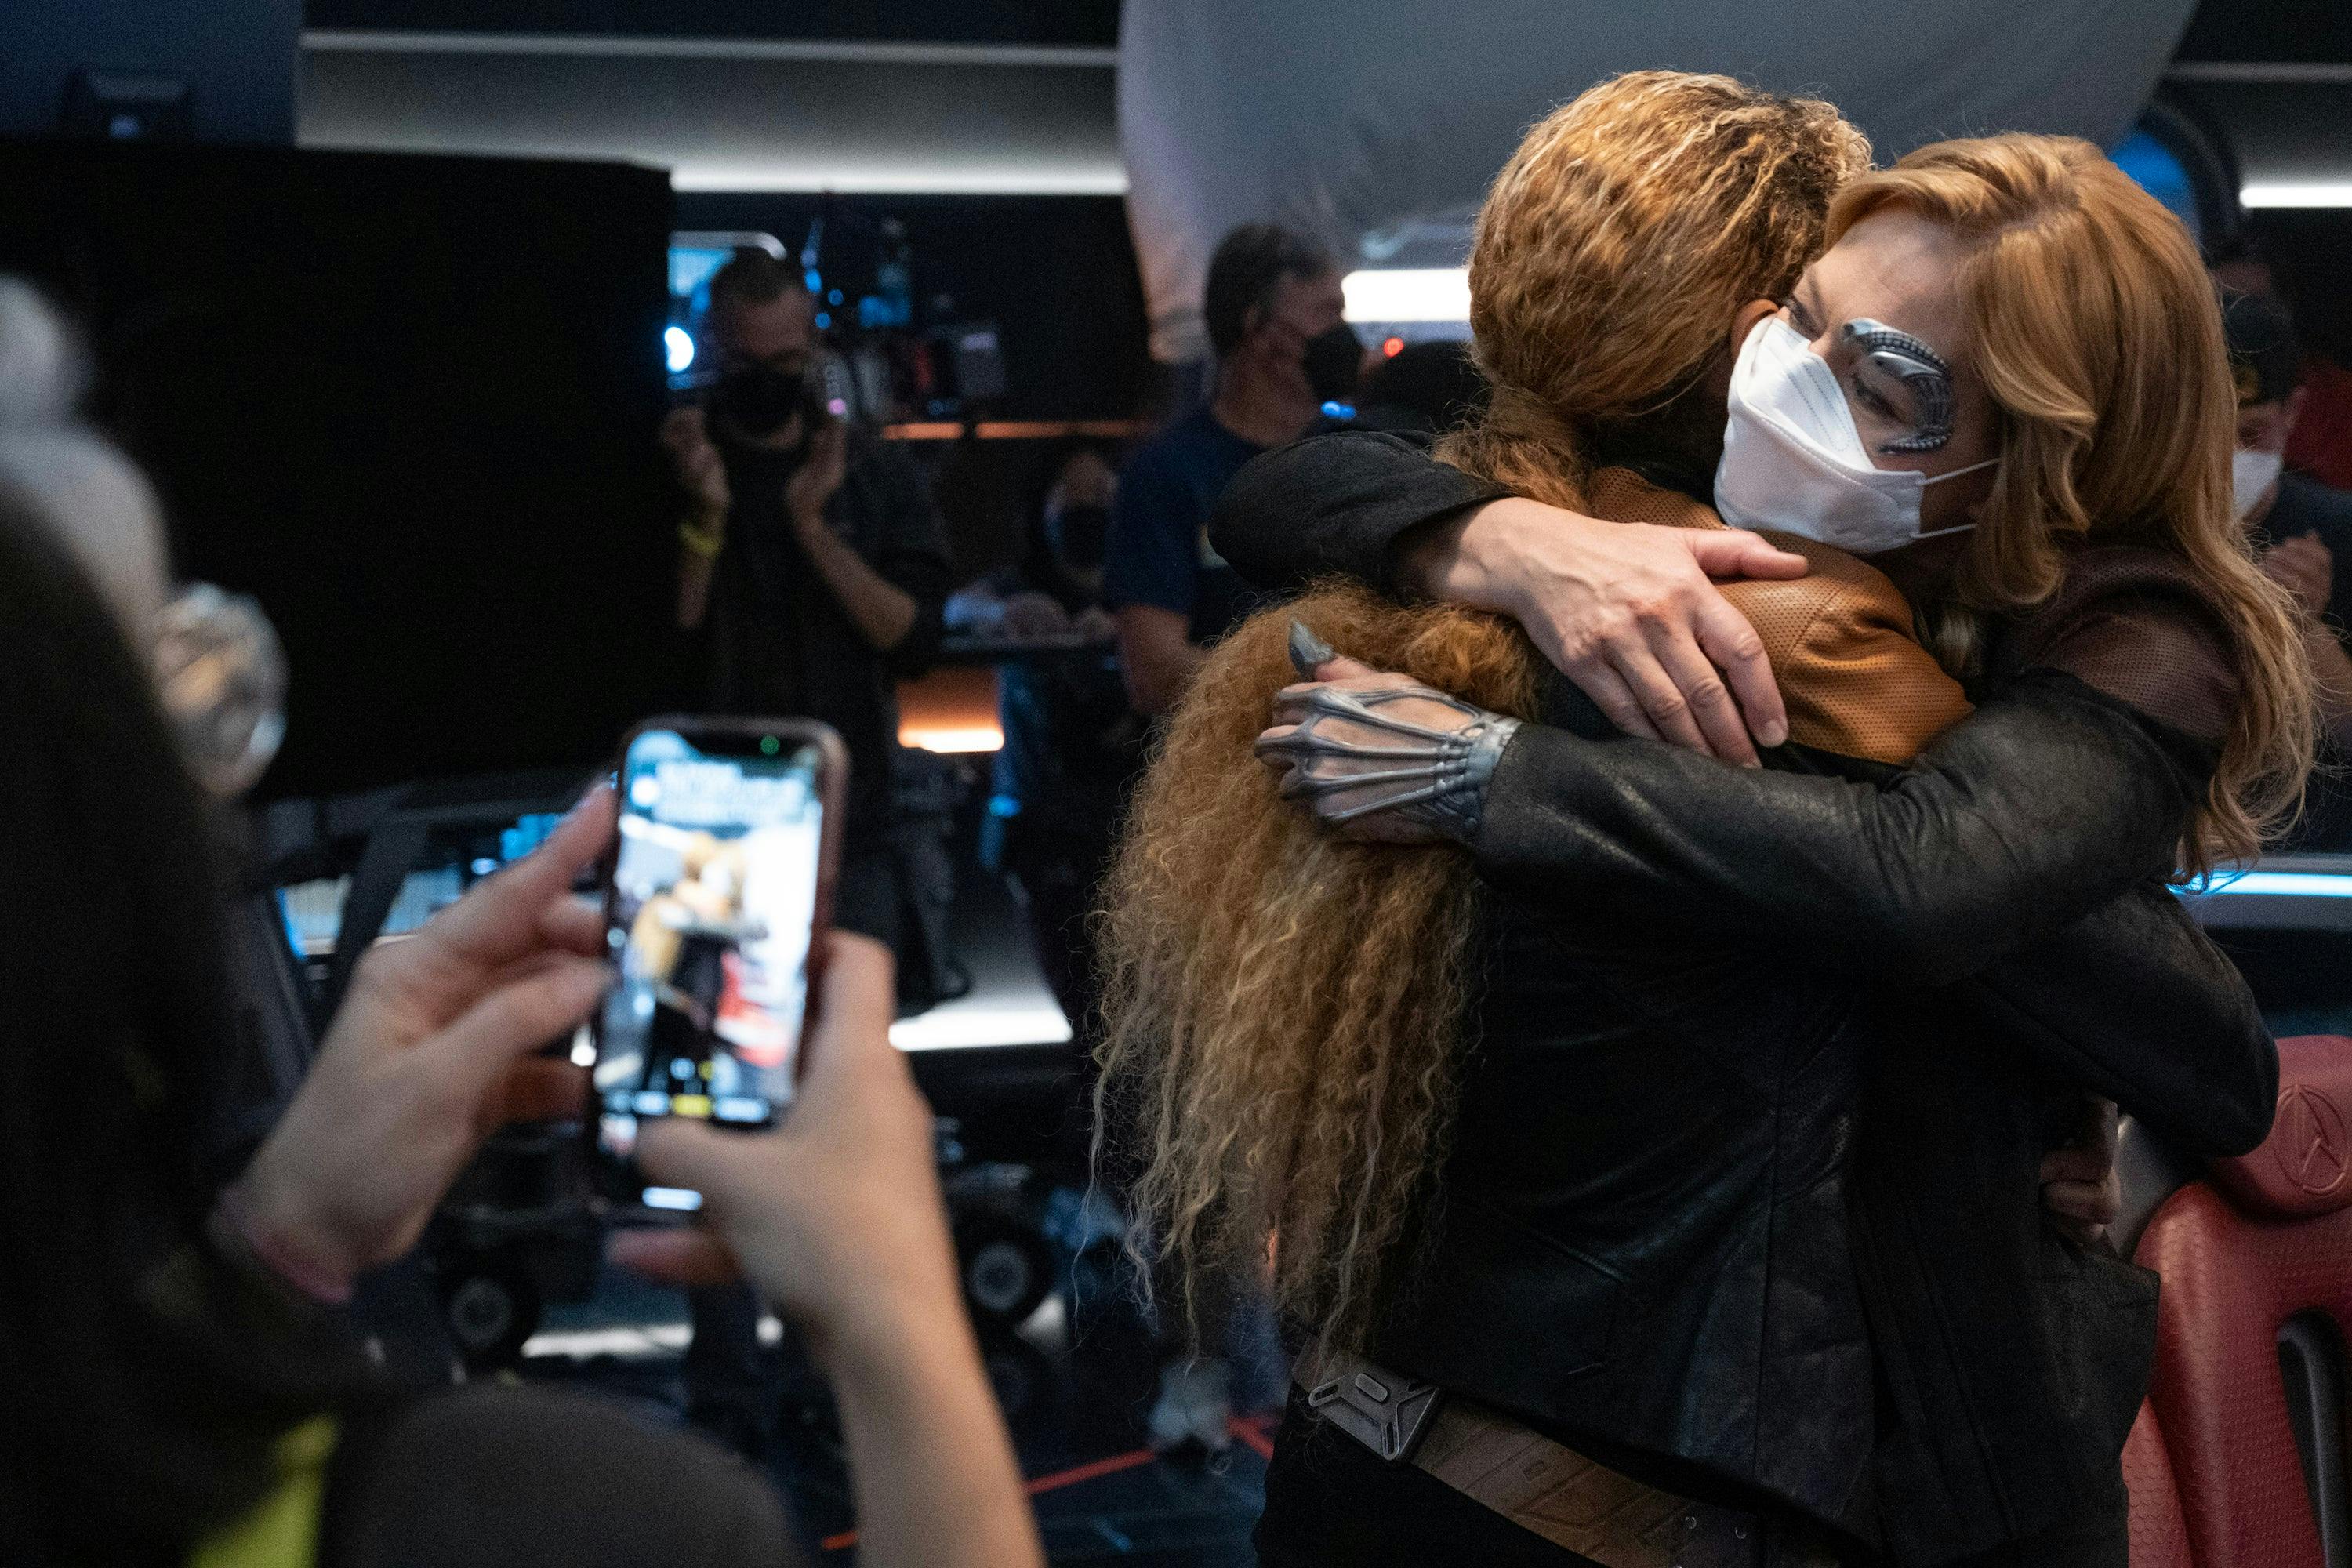 Star Trek: Picard BTS still - Michelle Hurd and Jeri Ryan hug as a production member takes a photo